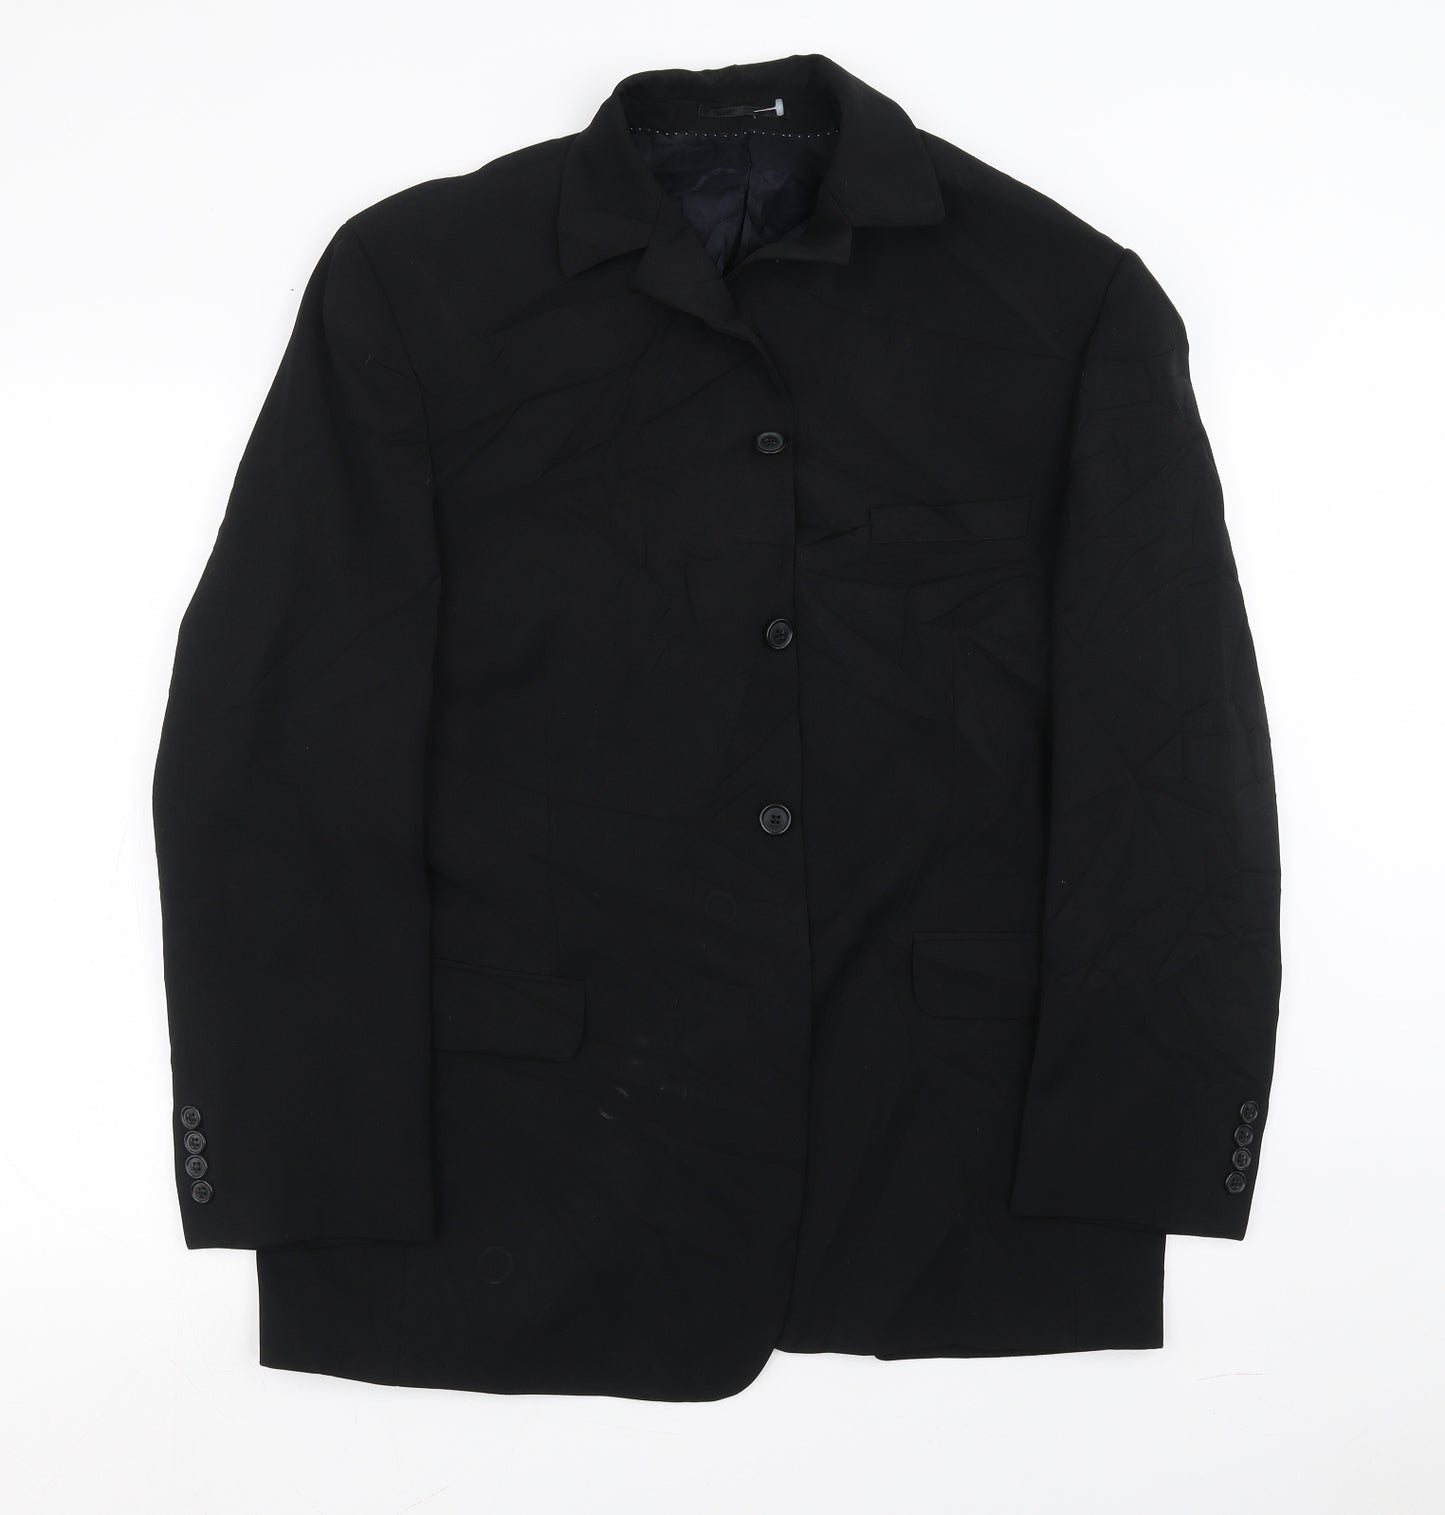 Wilson Mens Black   Jacket Suit Jacket Size 42